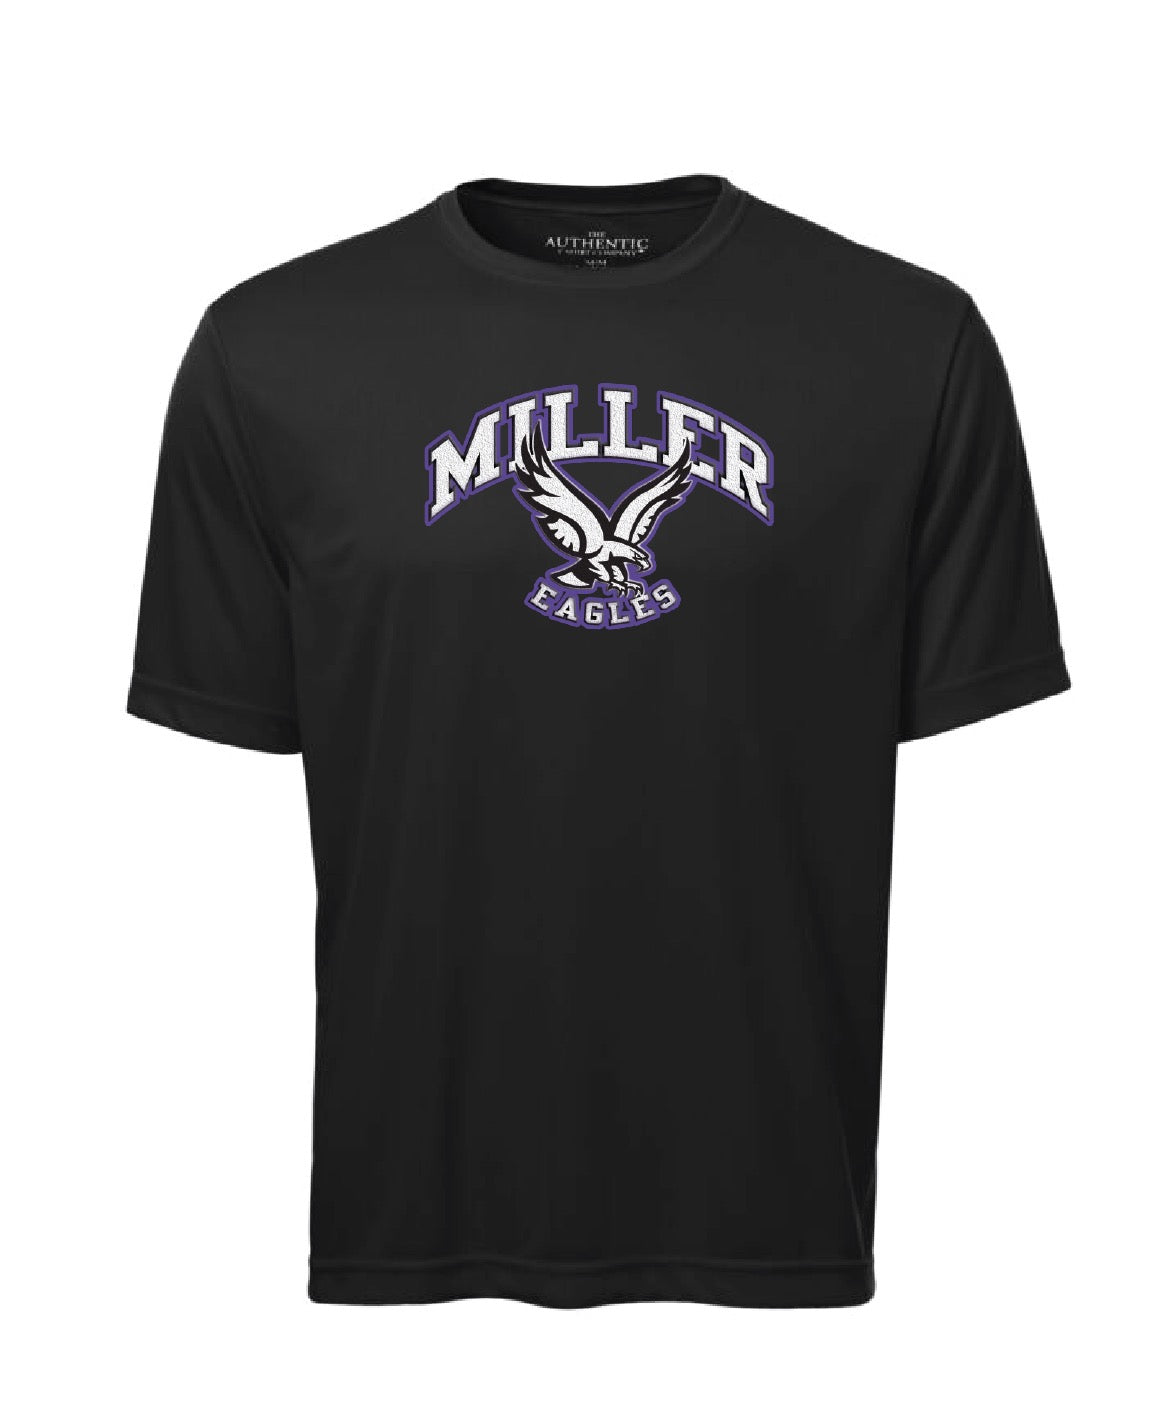 Adult "Miller Spirit Wear" Performance polyester